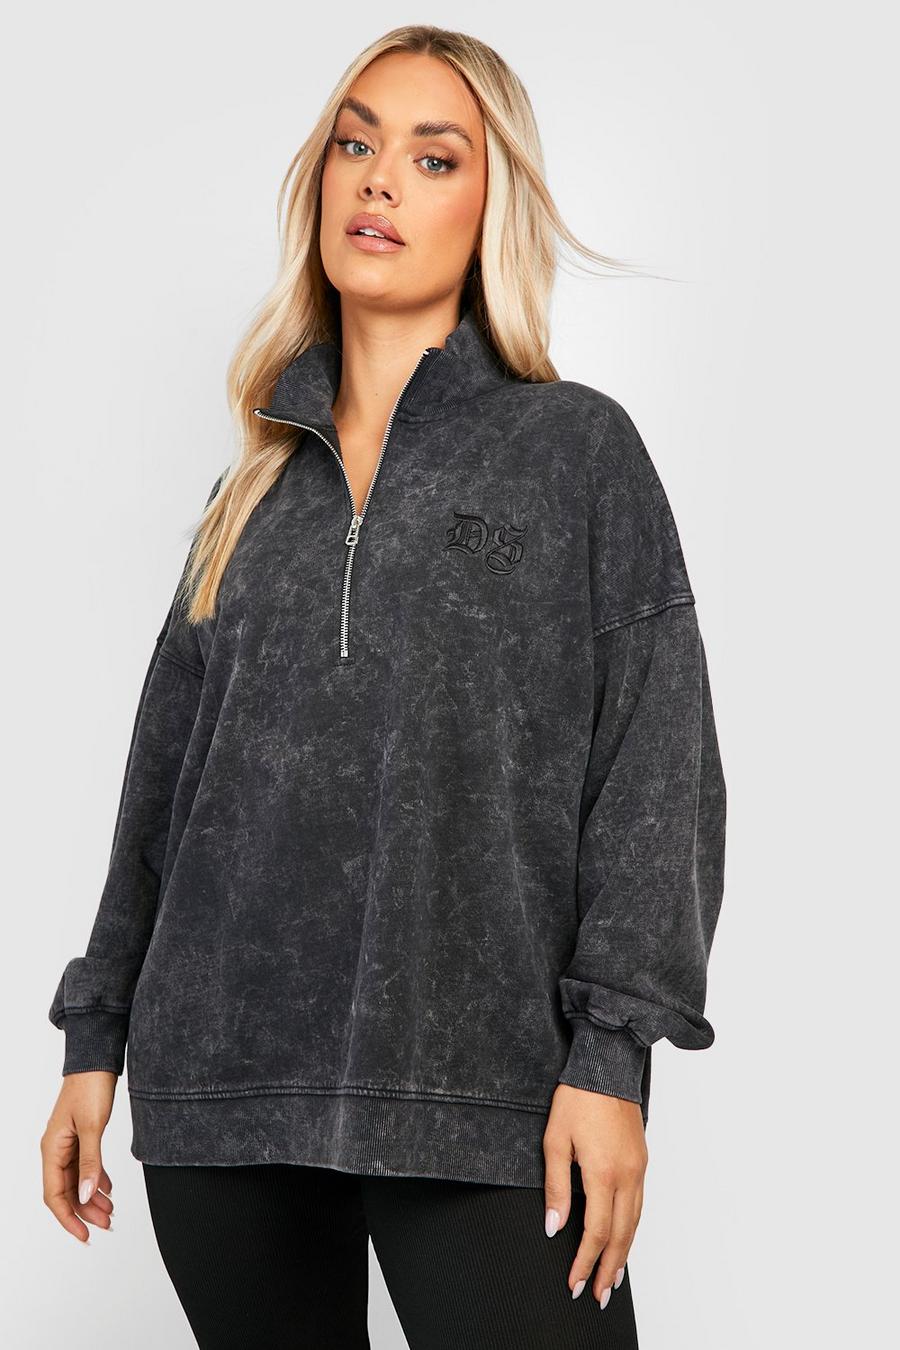 Charcoal grey Plus Acid Wash Embroidered Half Zip Sweater